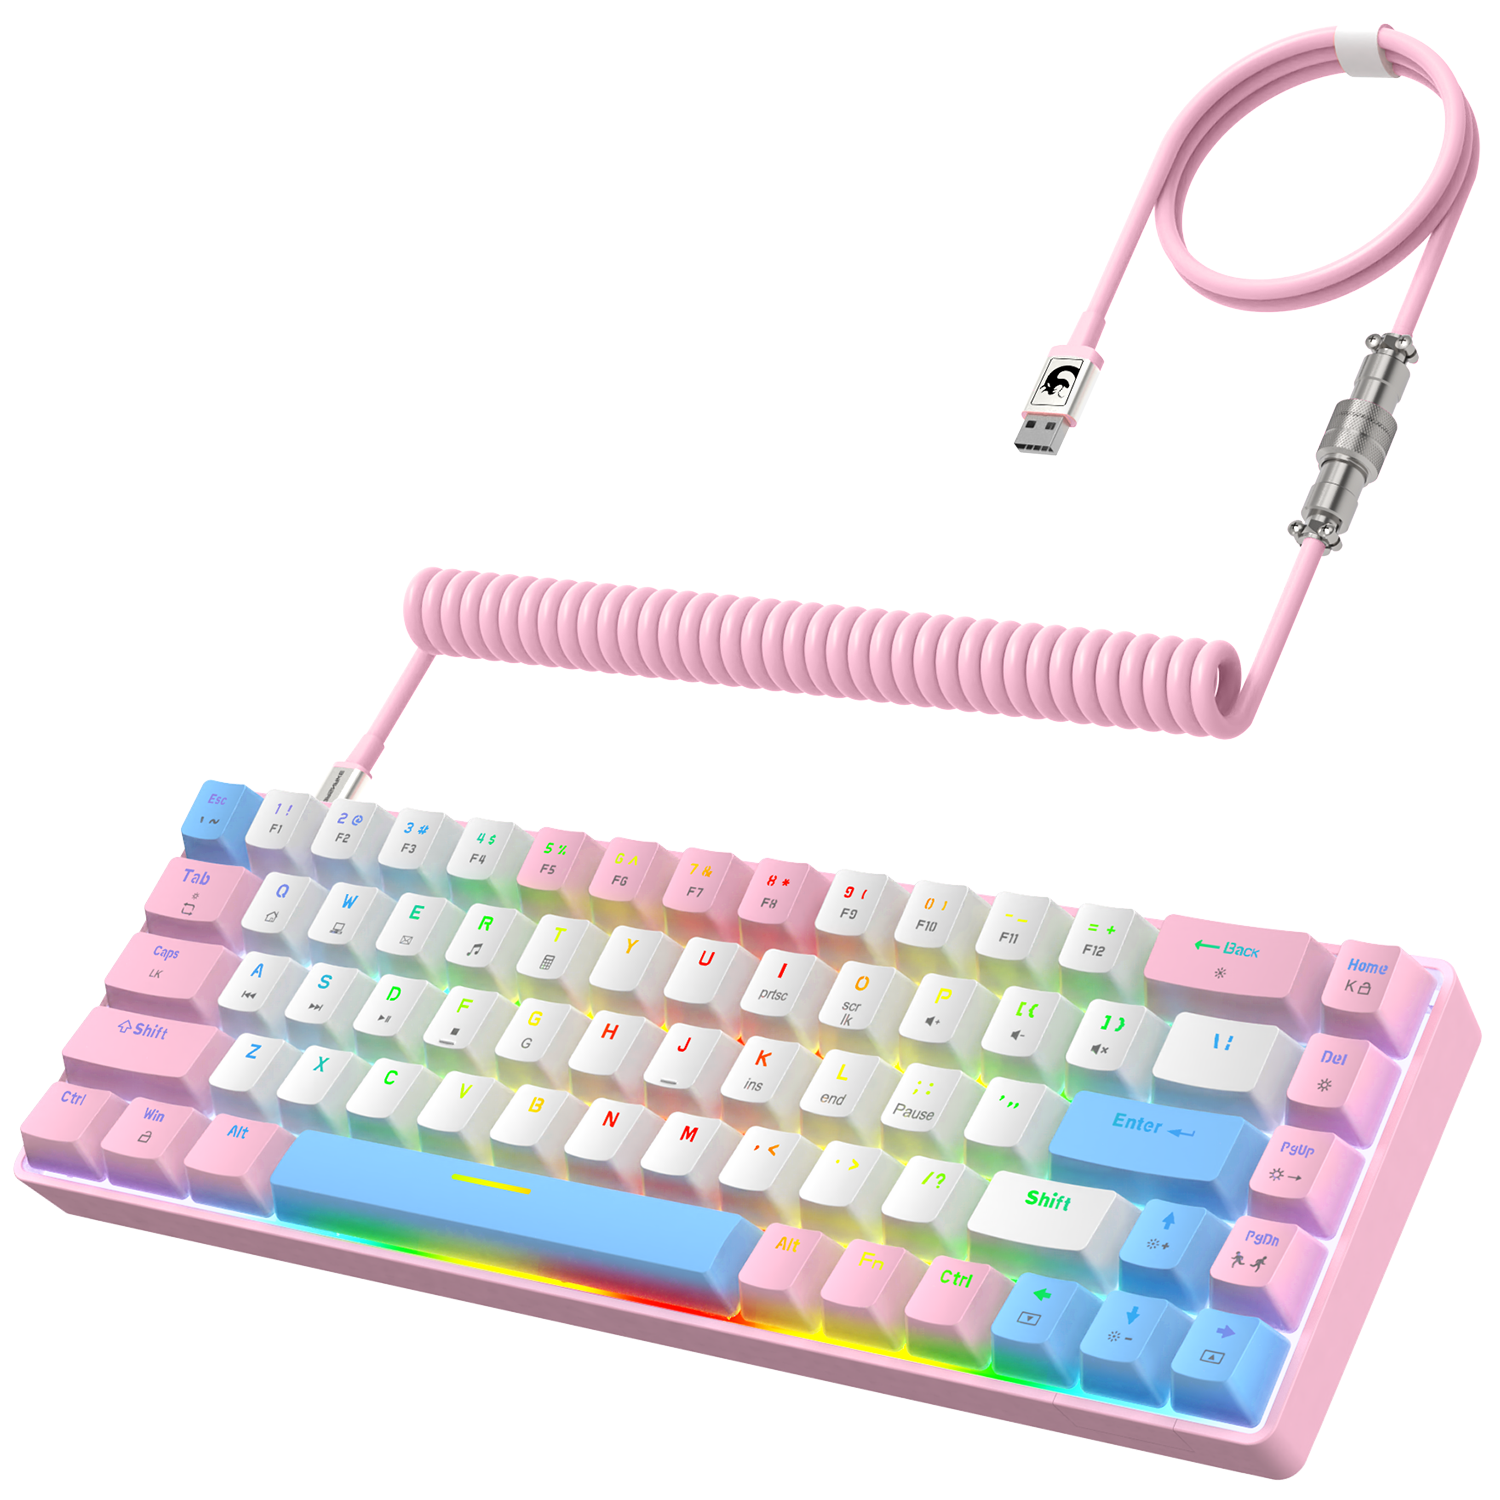 ZIYOULANG T8 60% Gaming Keyboard,68 Keys Compact Mini Wired Mechanical